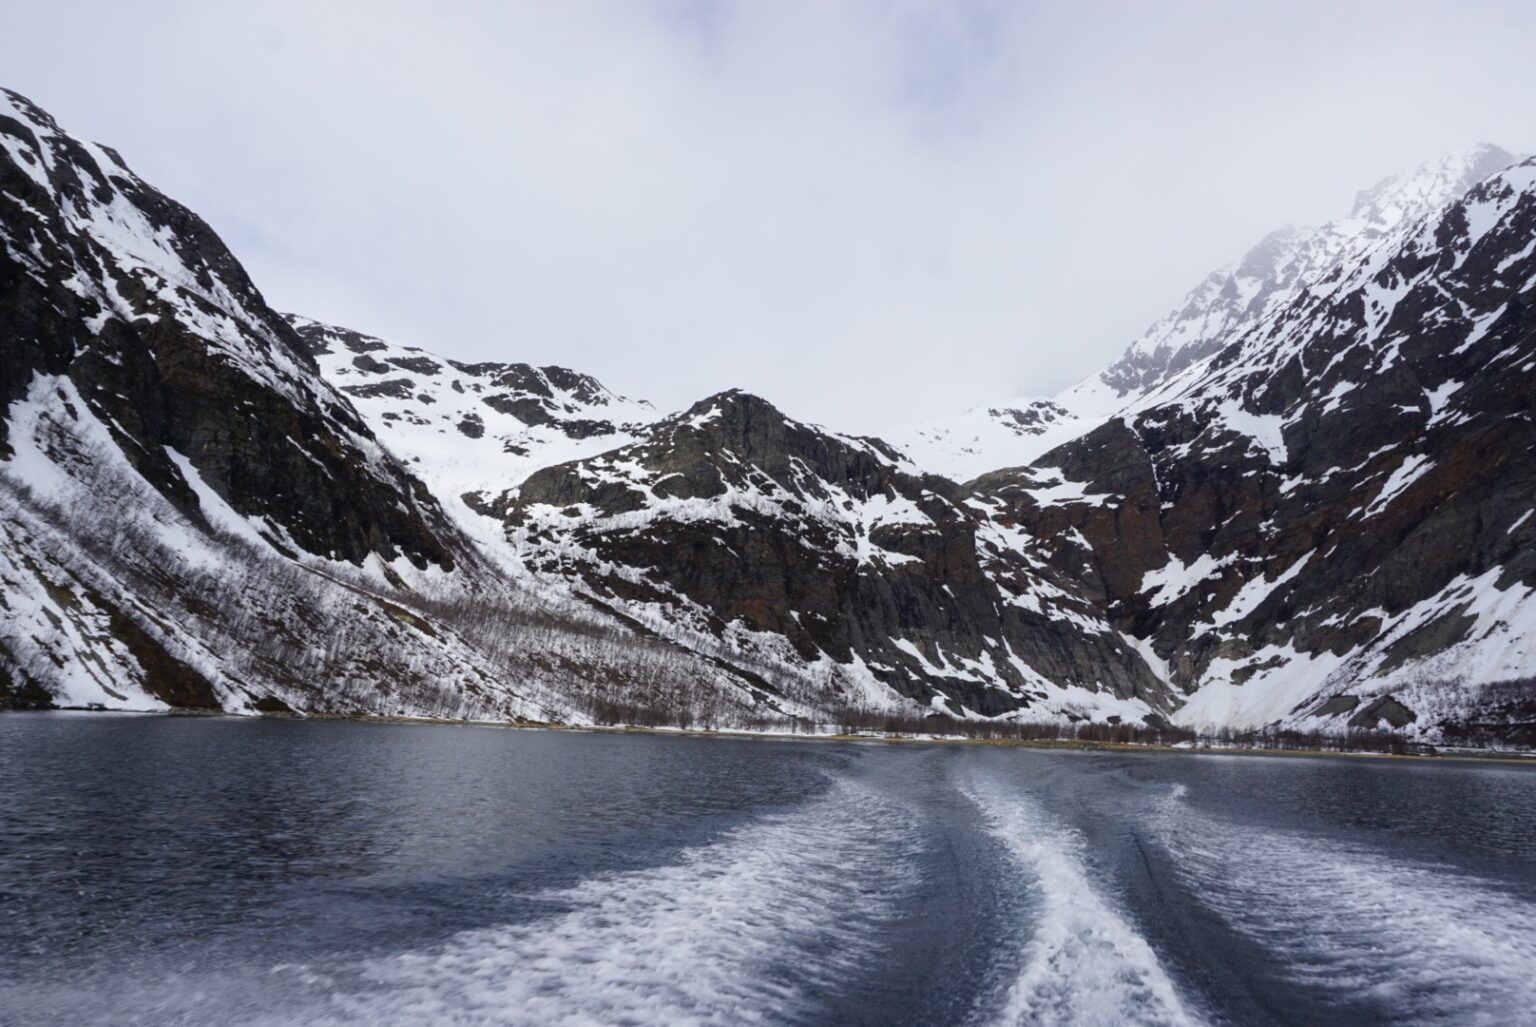 Leaving the Strupbeen Glacier via Boat